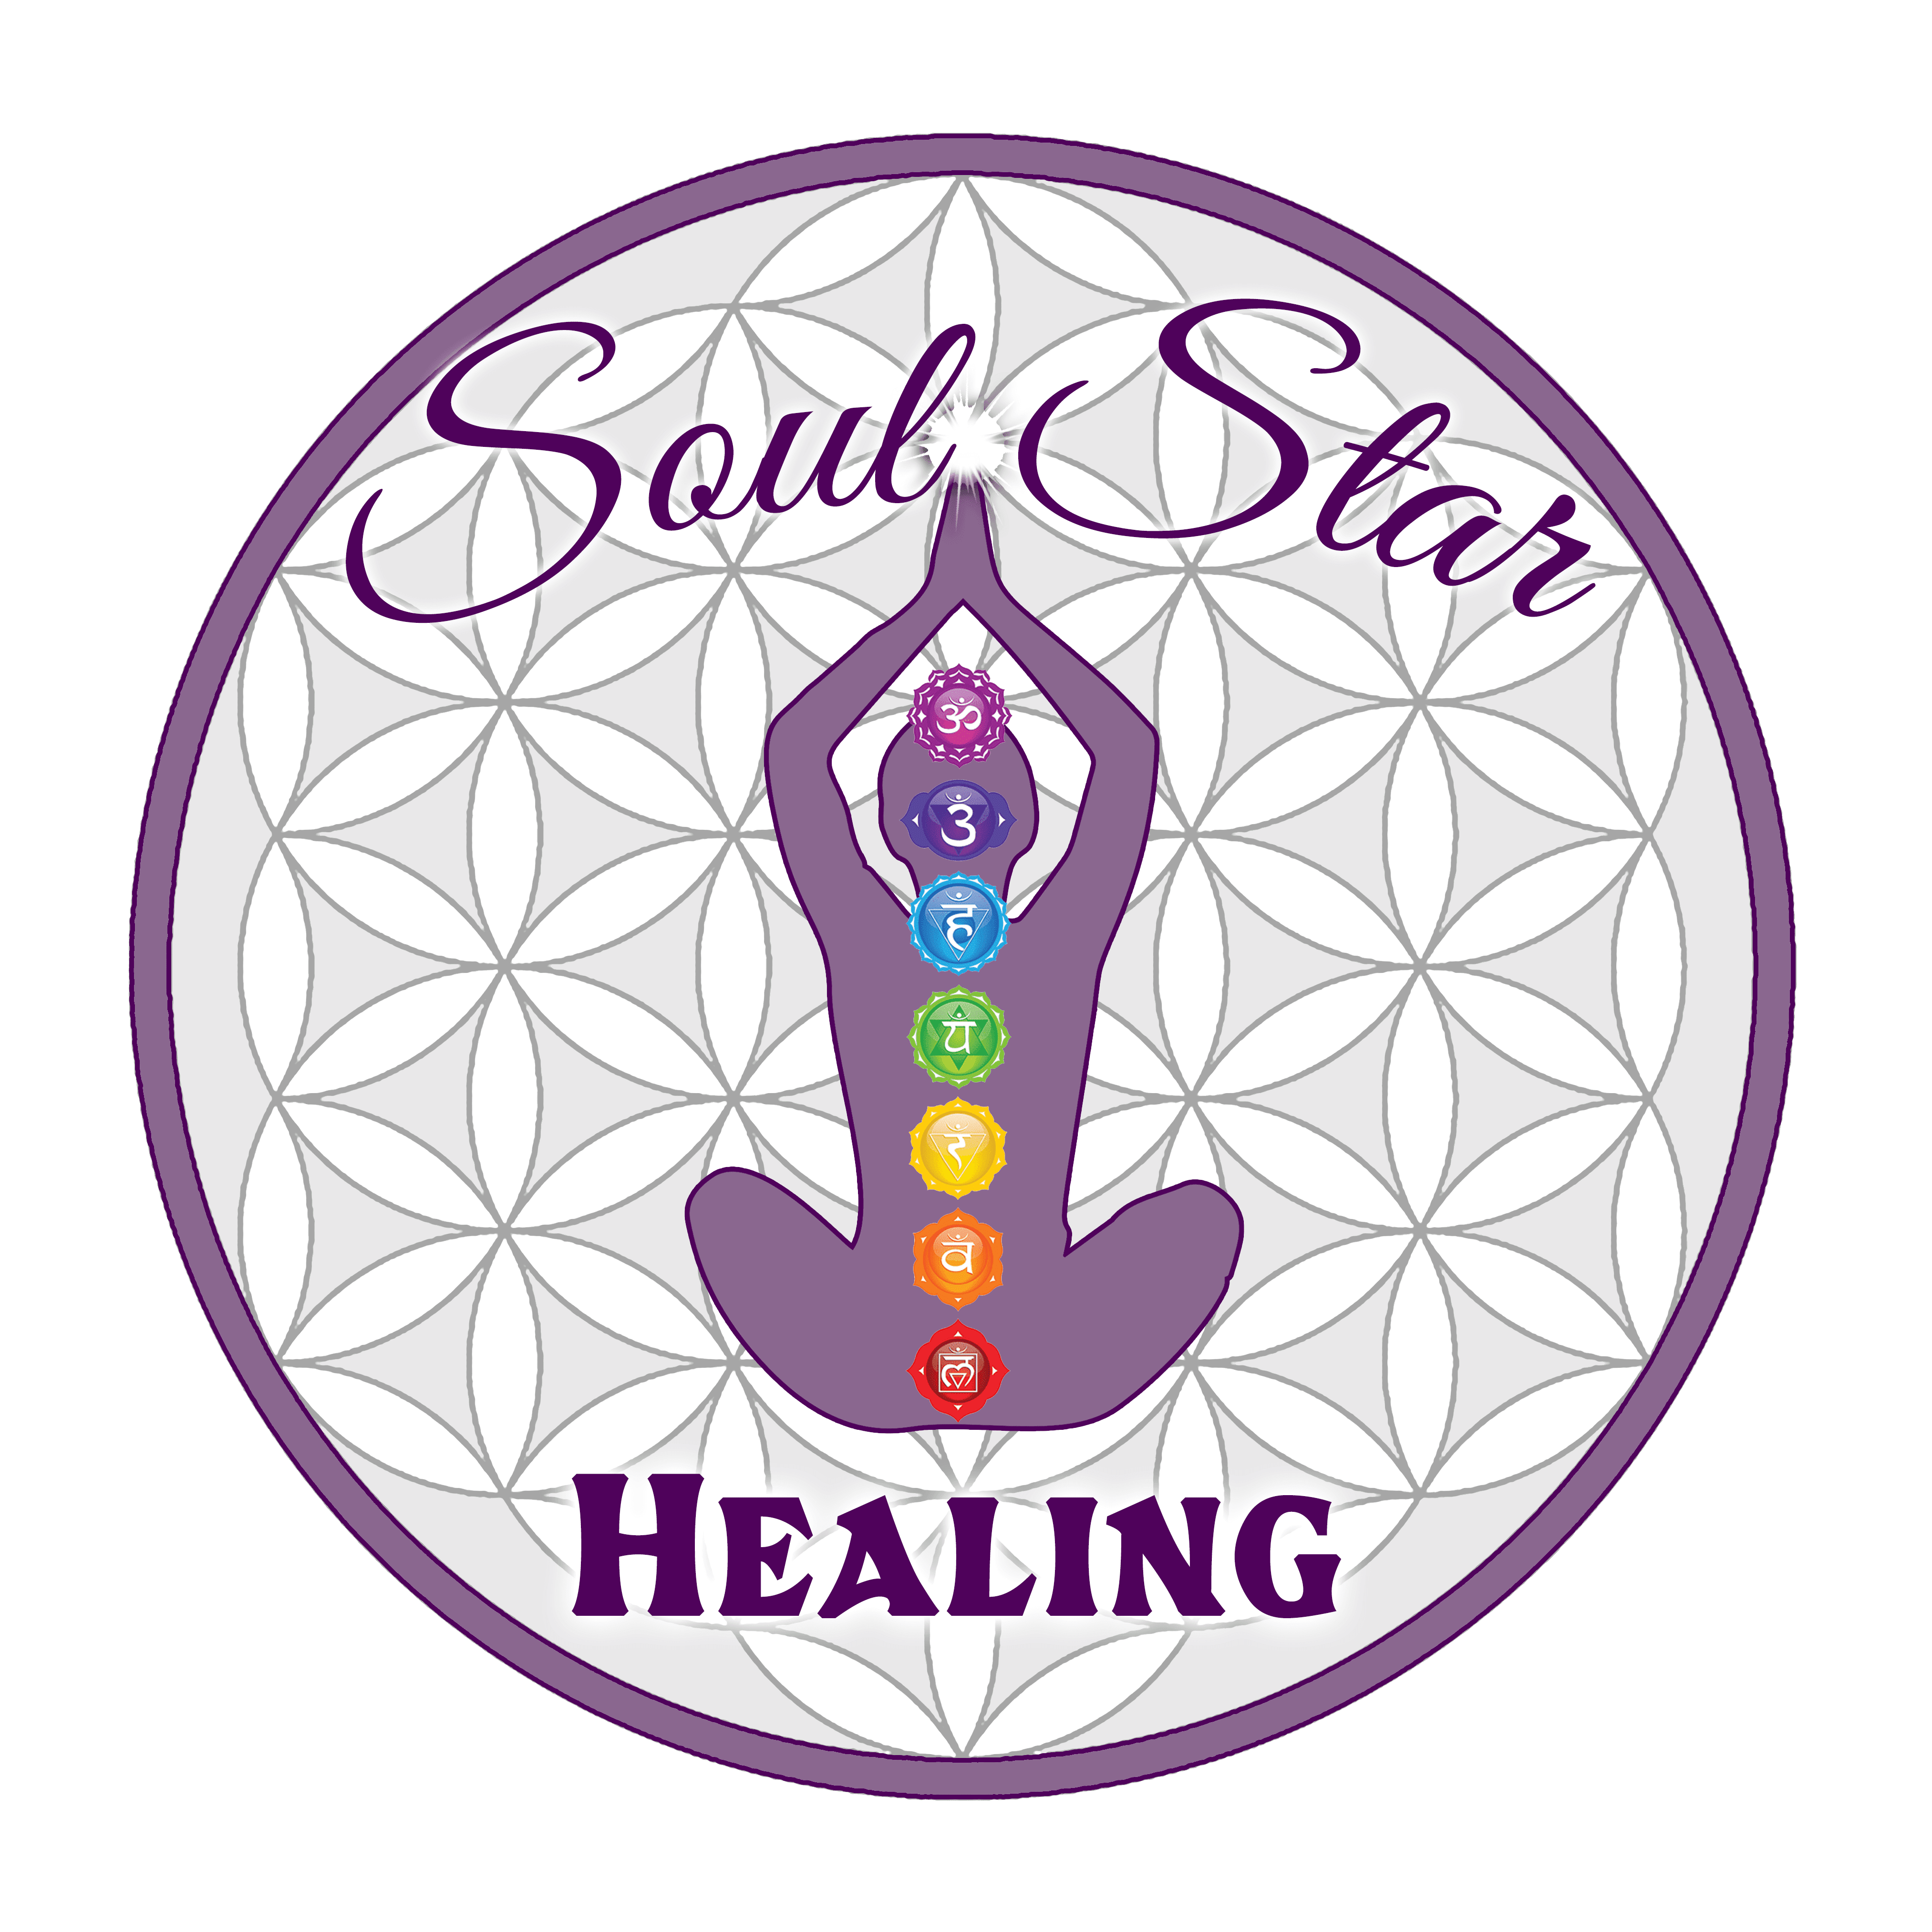 Soul Star Healing